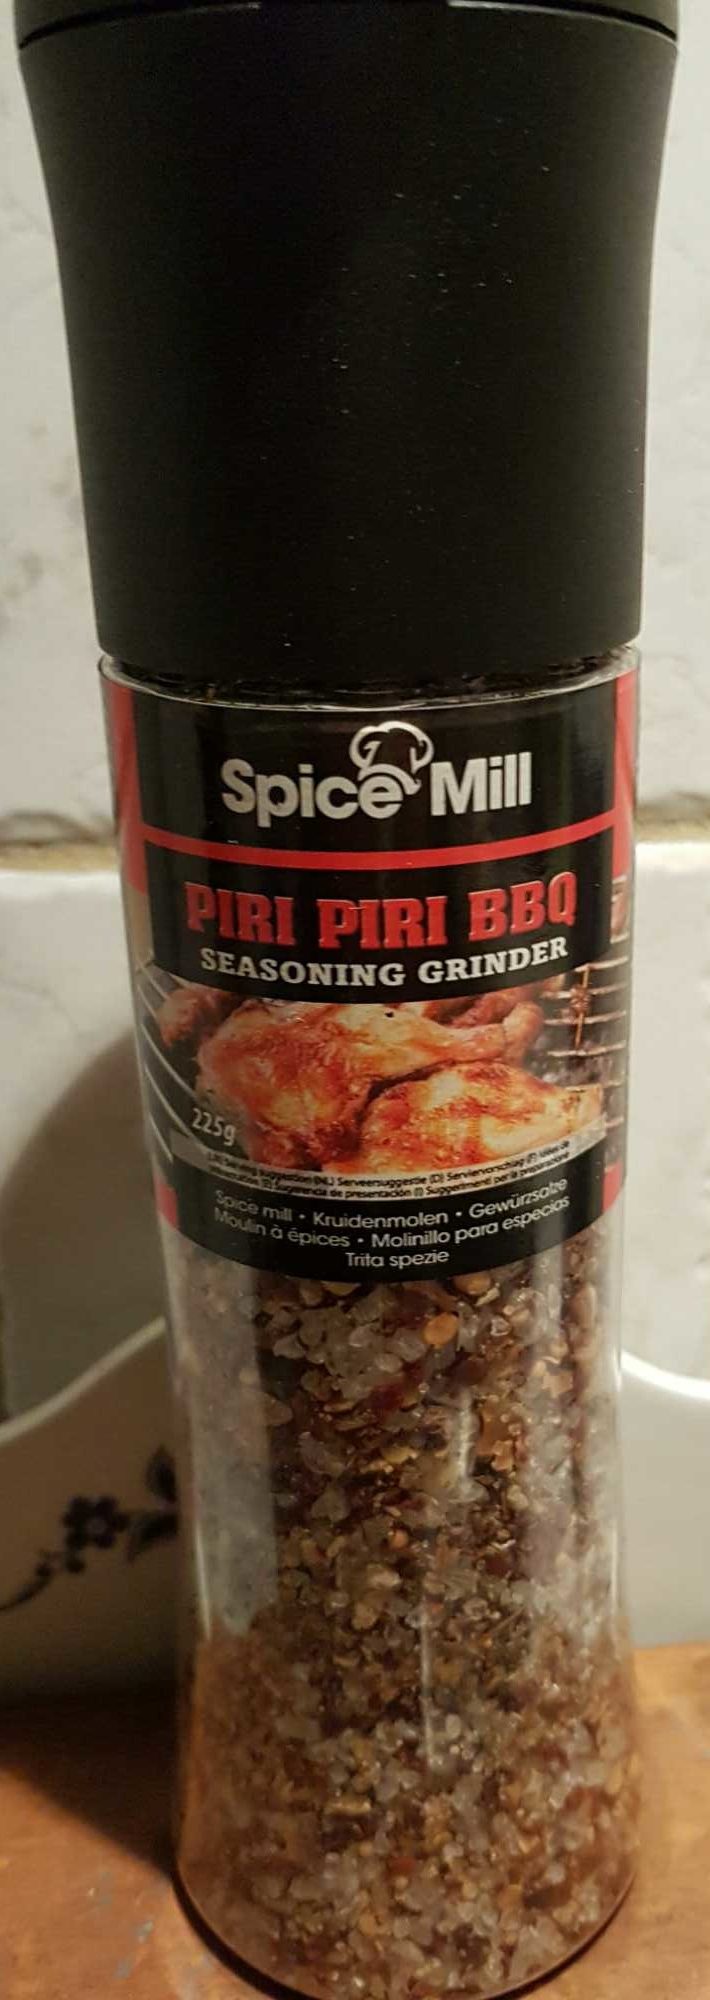 Piri Piri BBQ seasoning grinder - Produit